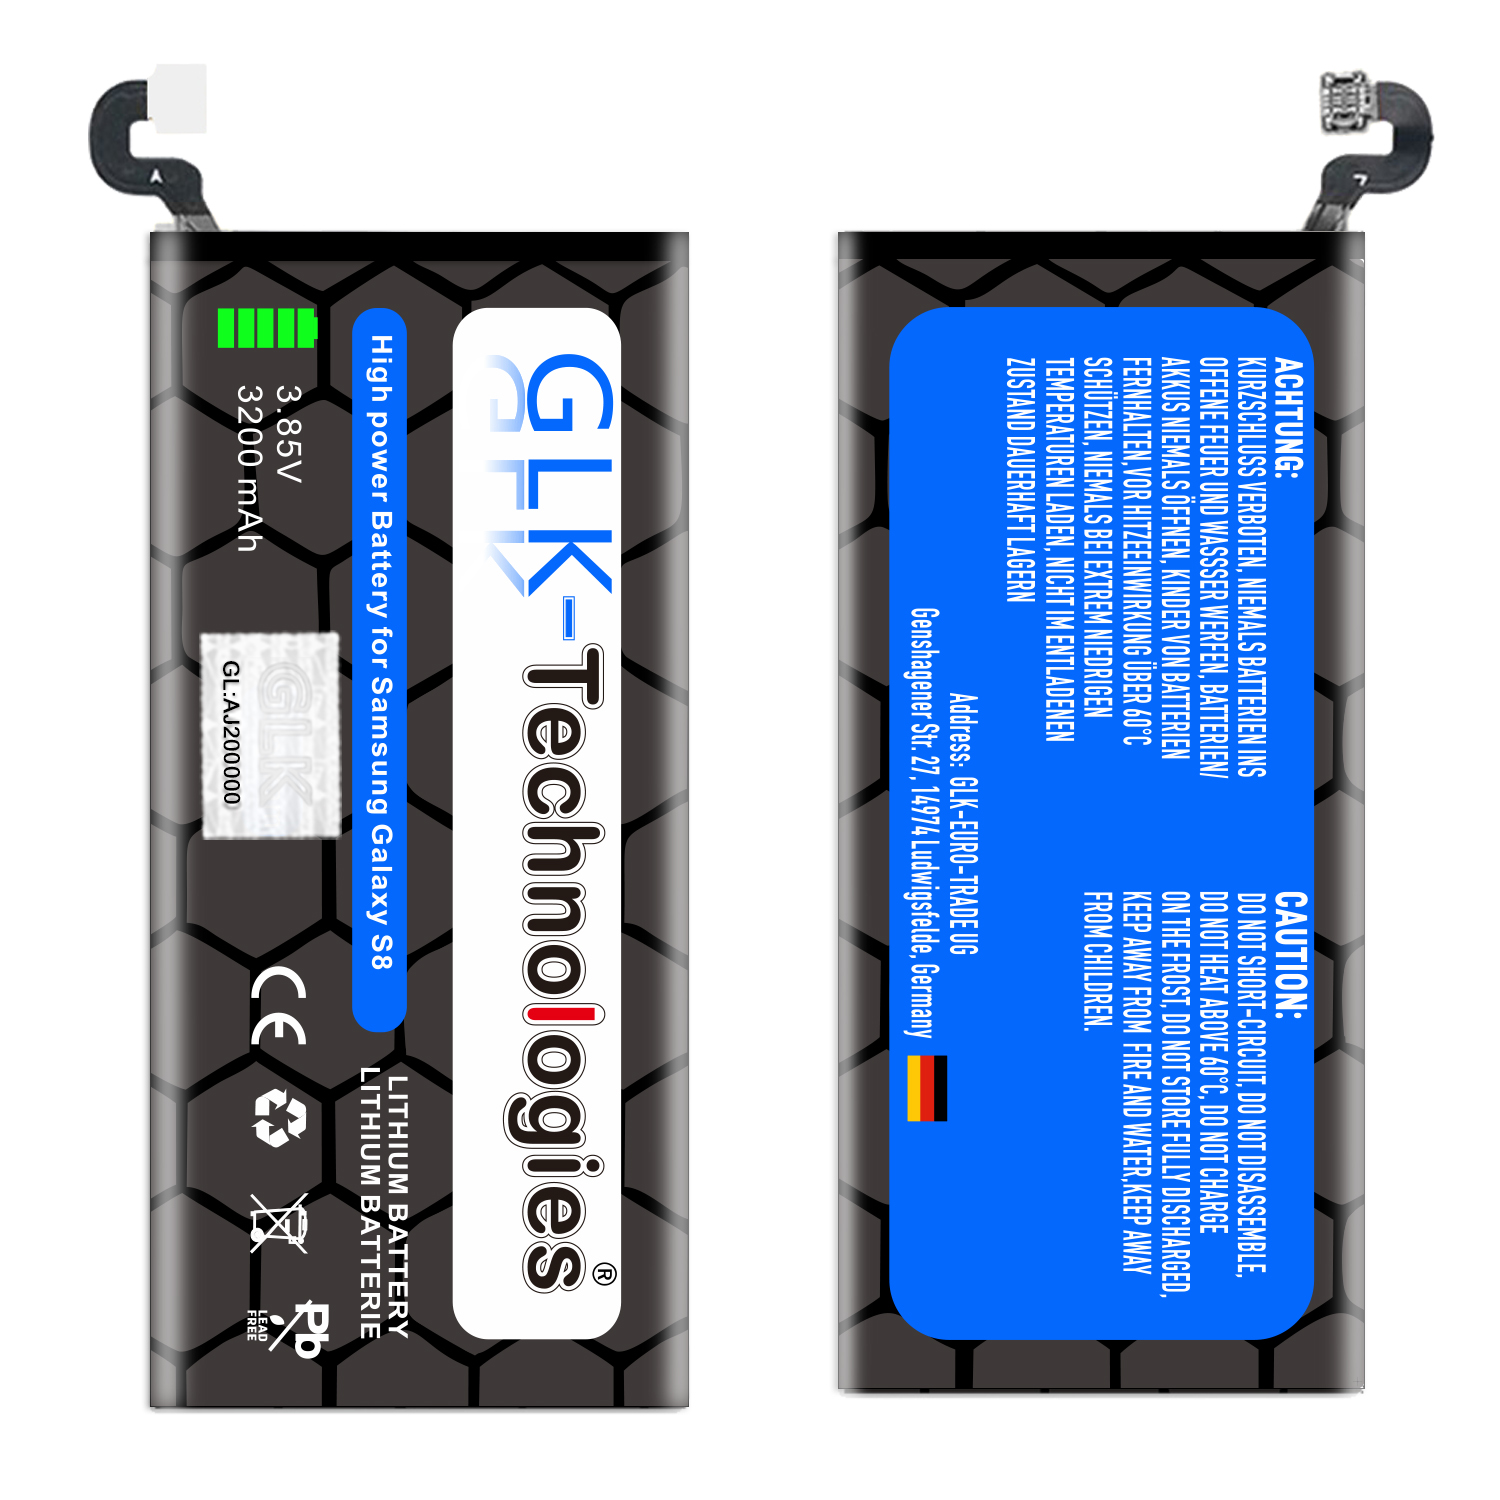 Smartphone S8 Akku Accu 3200 | Samsung Ersatz GLK-TECHNOLOGIES inklusive Battery Werkzeugset Lithium-Ionen-Akku | Galaxy EB-BG950BBE mAh | für Akku SM-G950F